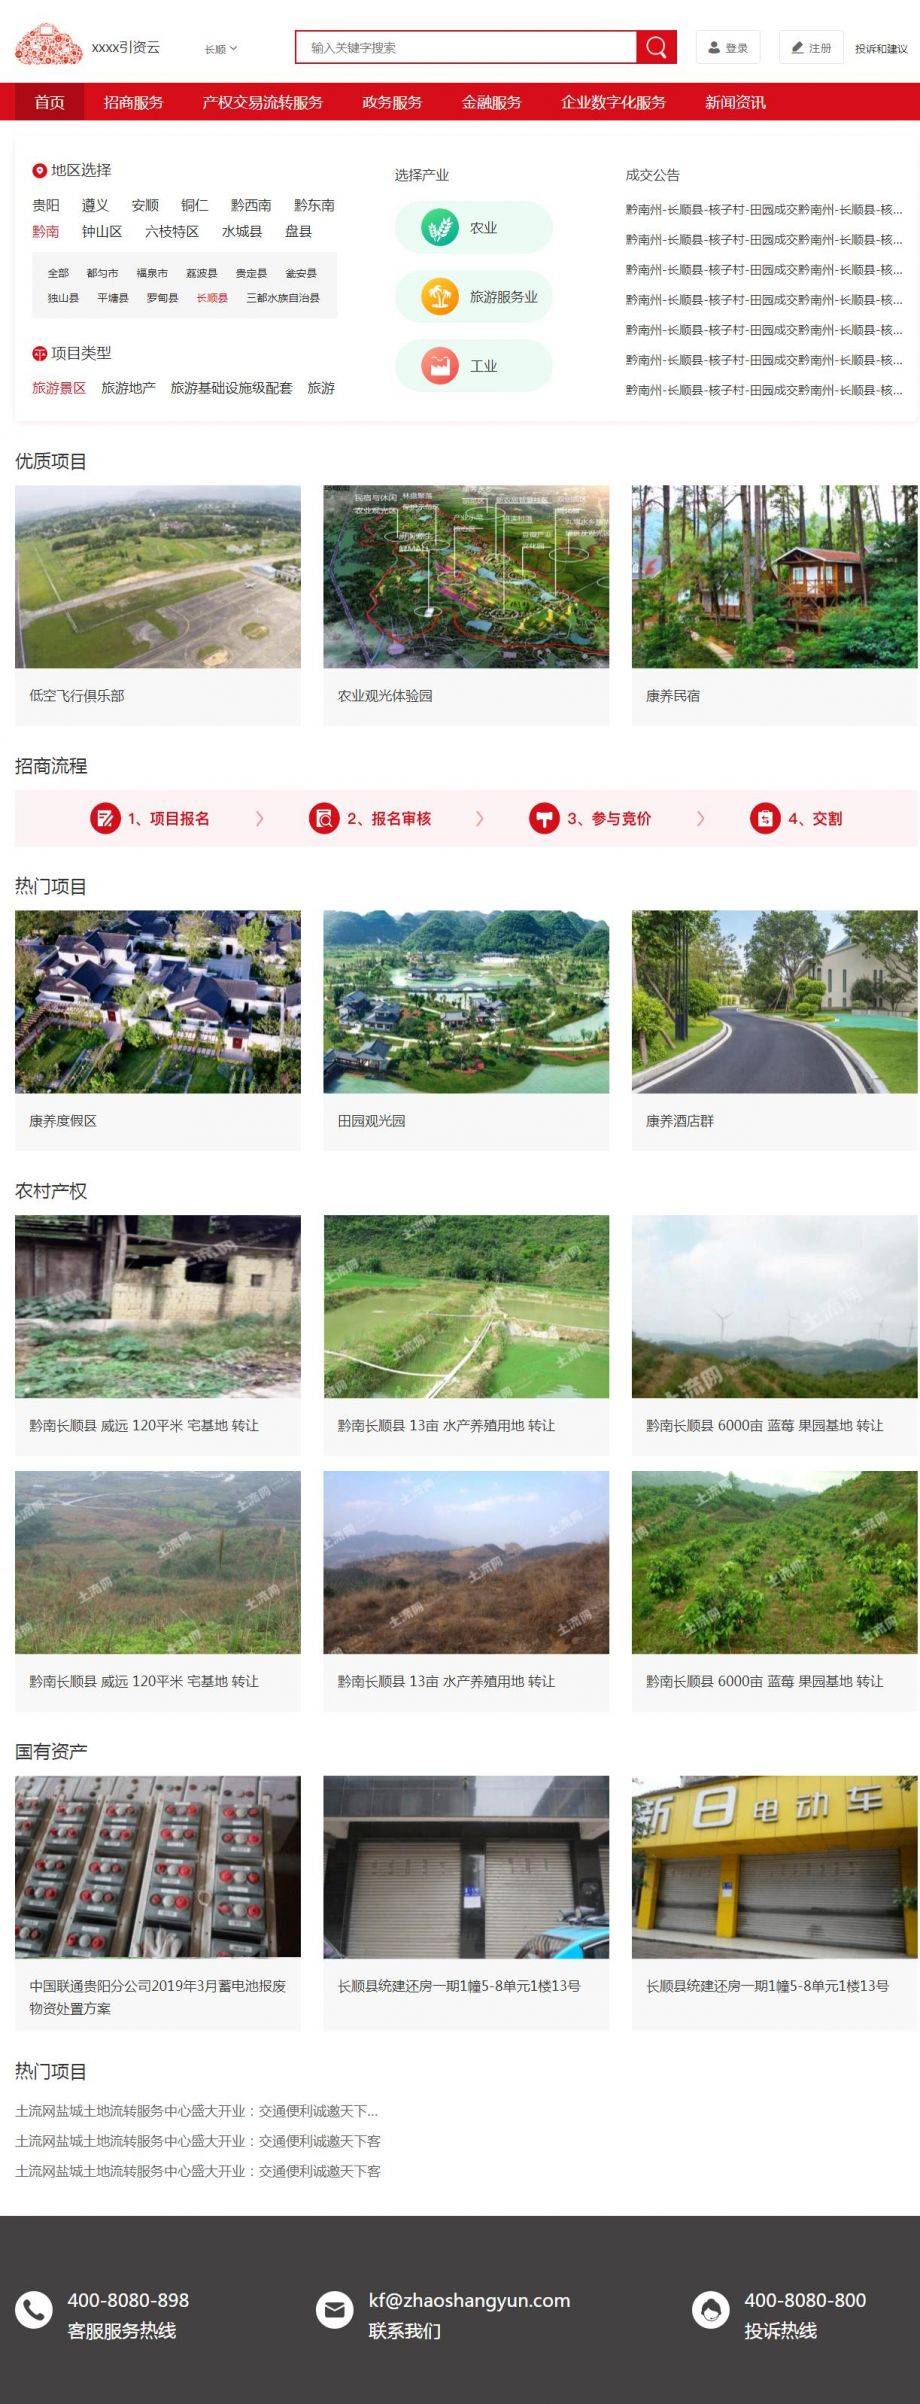 H5农村资源转让招商引资项目展示网站